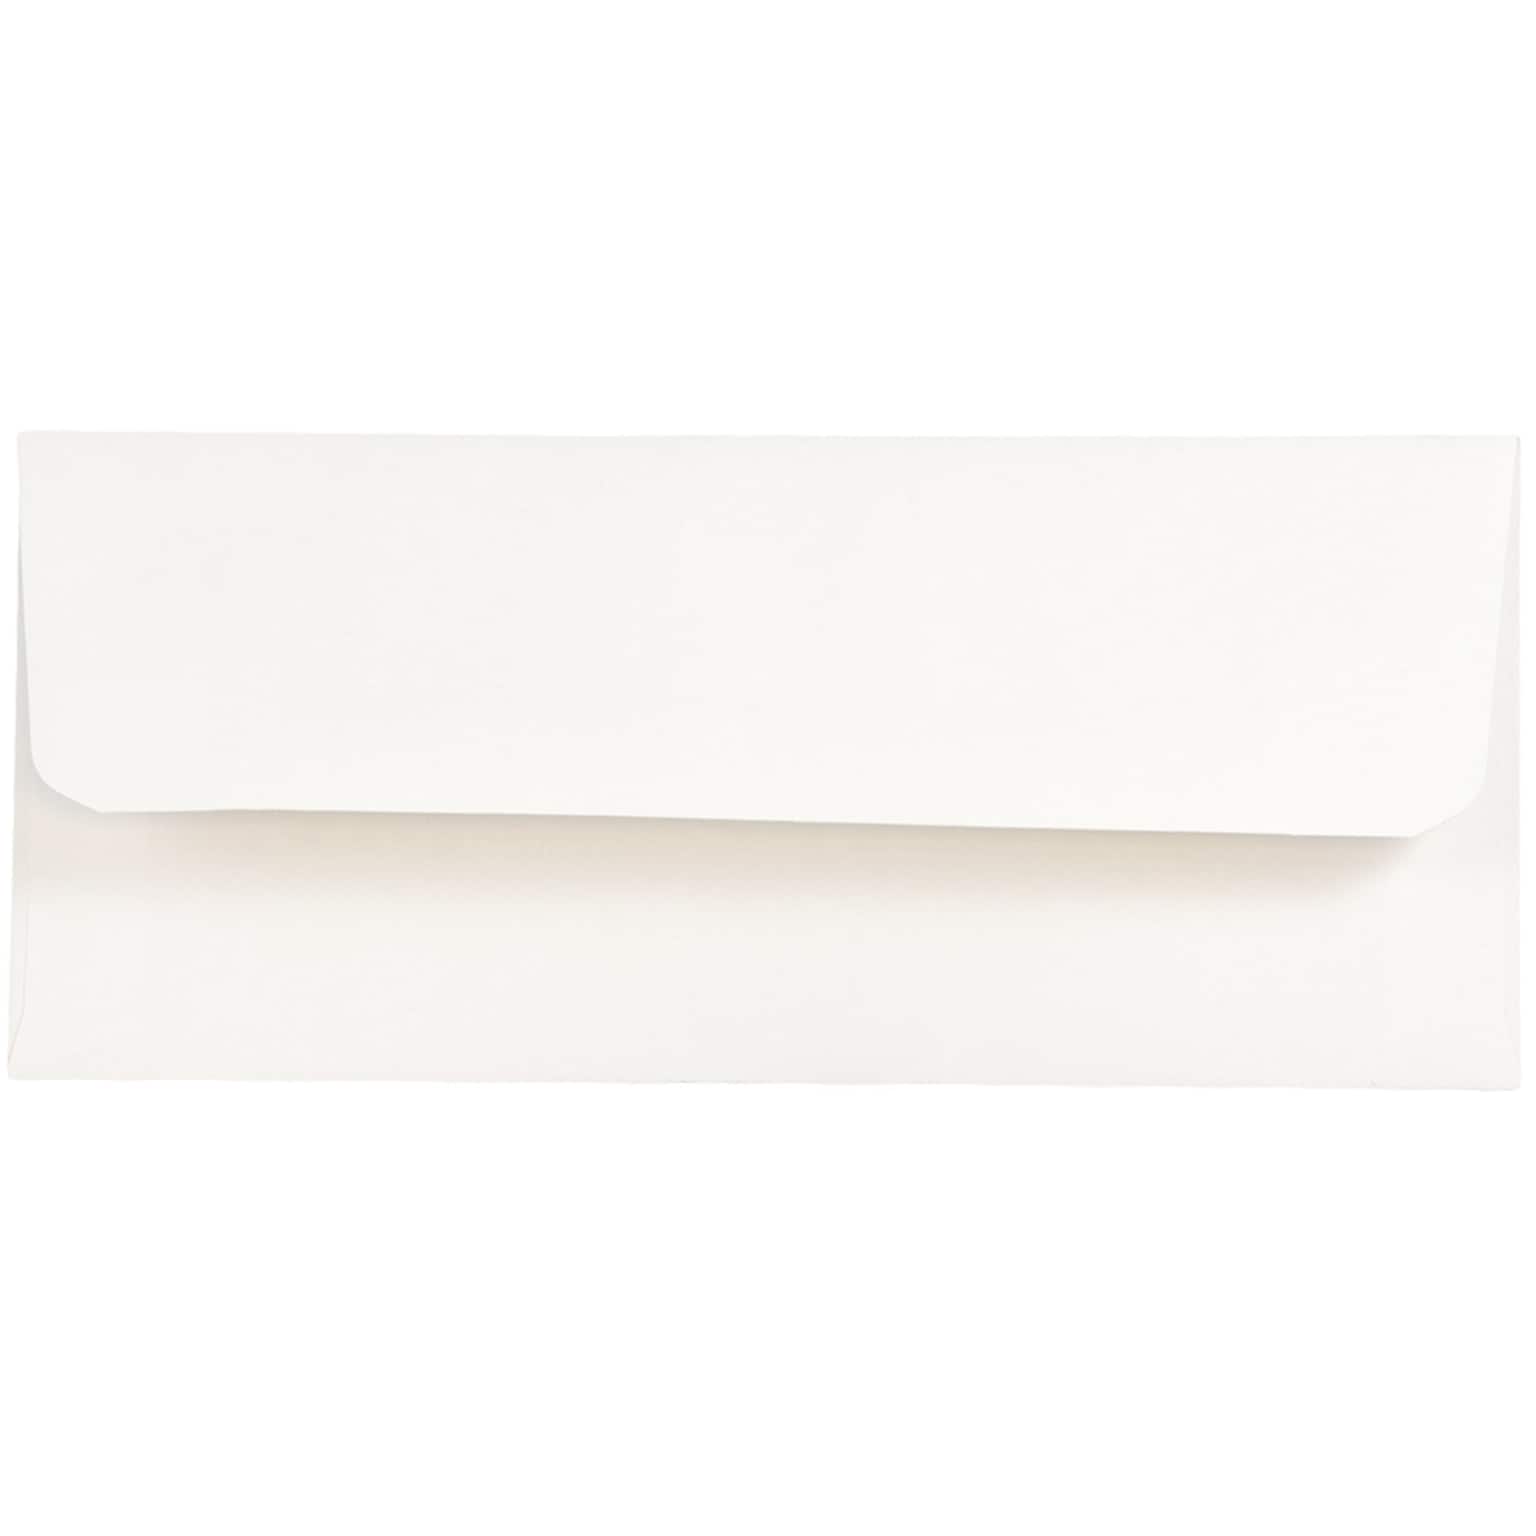 JAM Paper Currency Envelope, 3 x 6 11/16, White, 250/Box (216313691I)